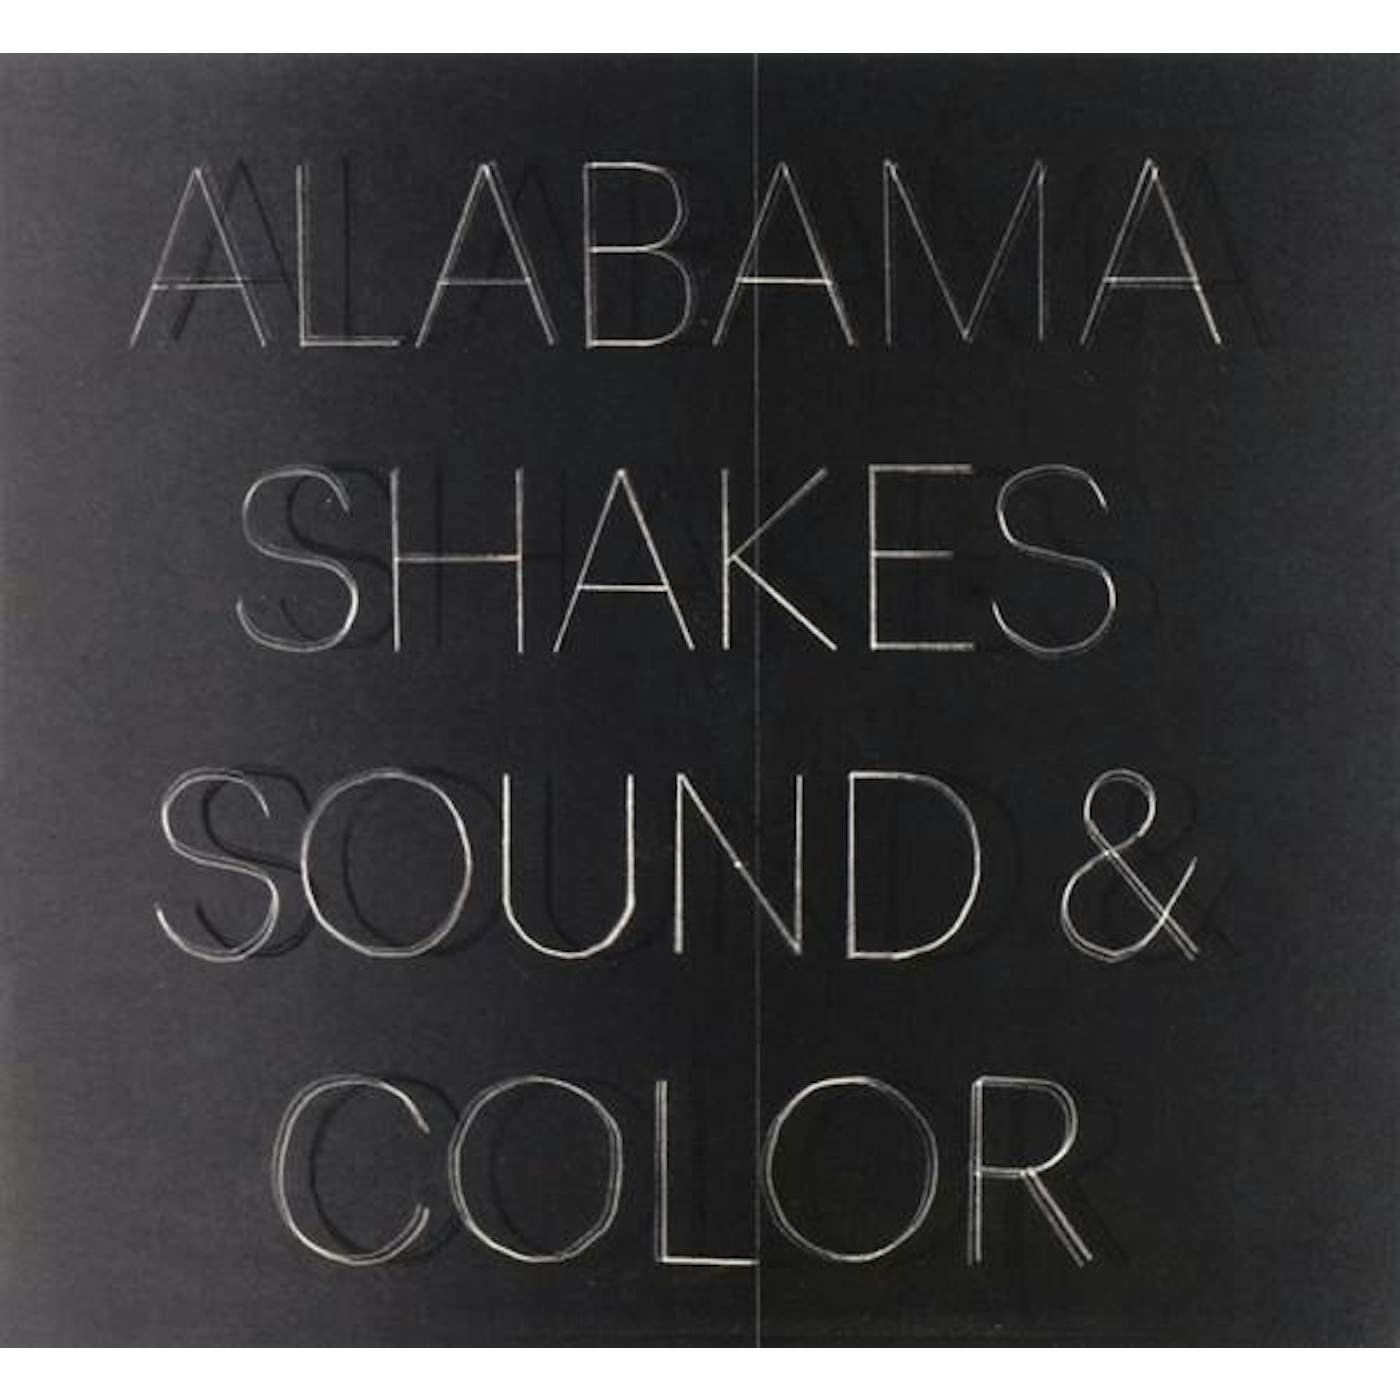 Alabama Shakes SOUND & COLOR CD